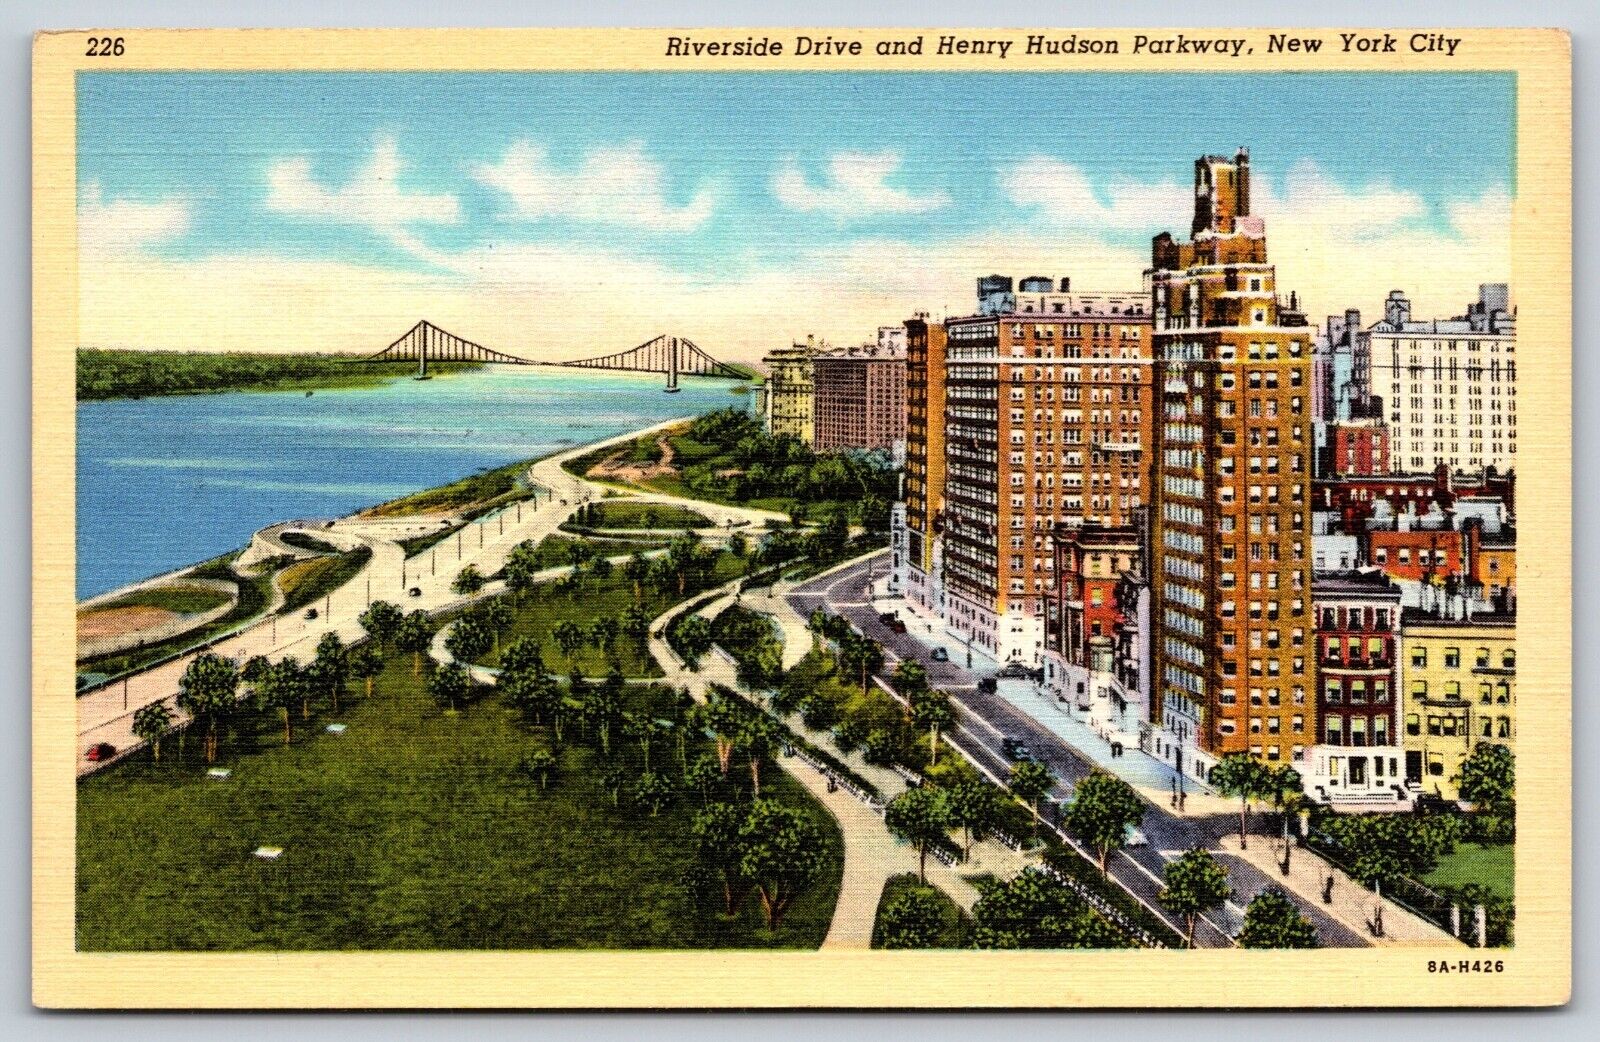 Henry Hudson Parkway, New York City, New York Vintage Postcard